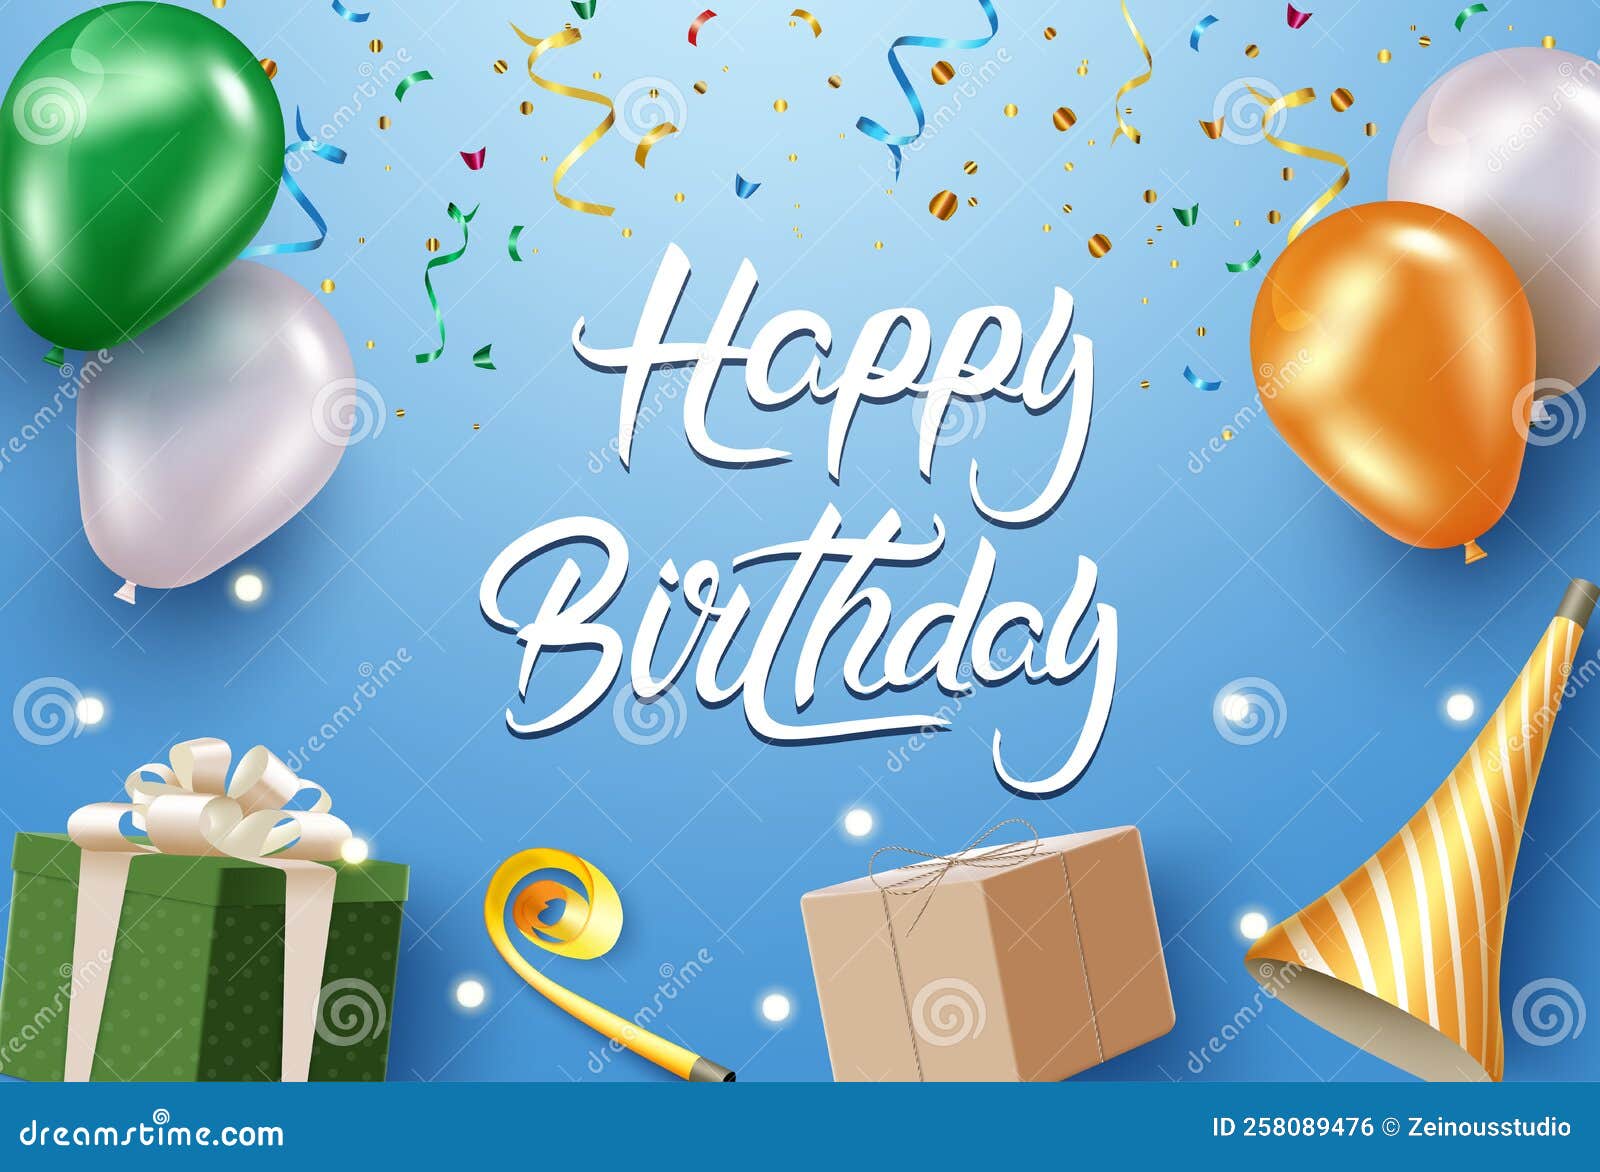 Birthday Greeting Vector Design. Happy Birthday Text with Confetti ...